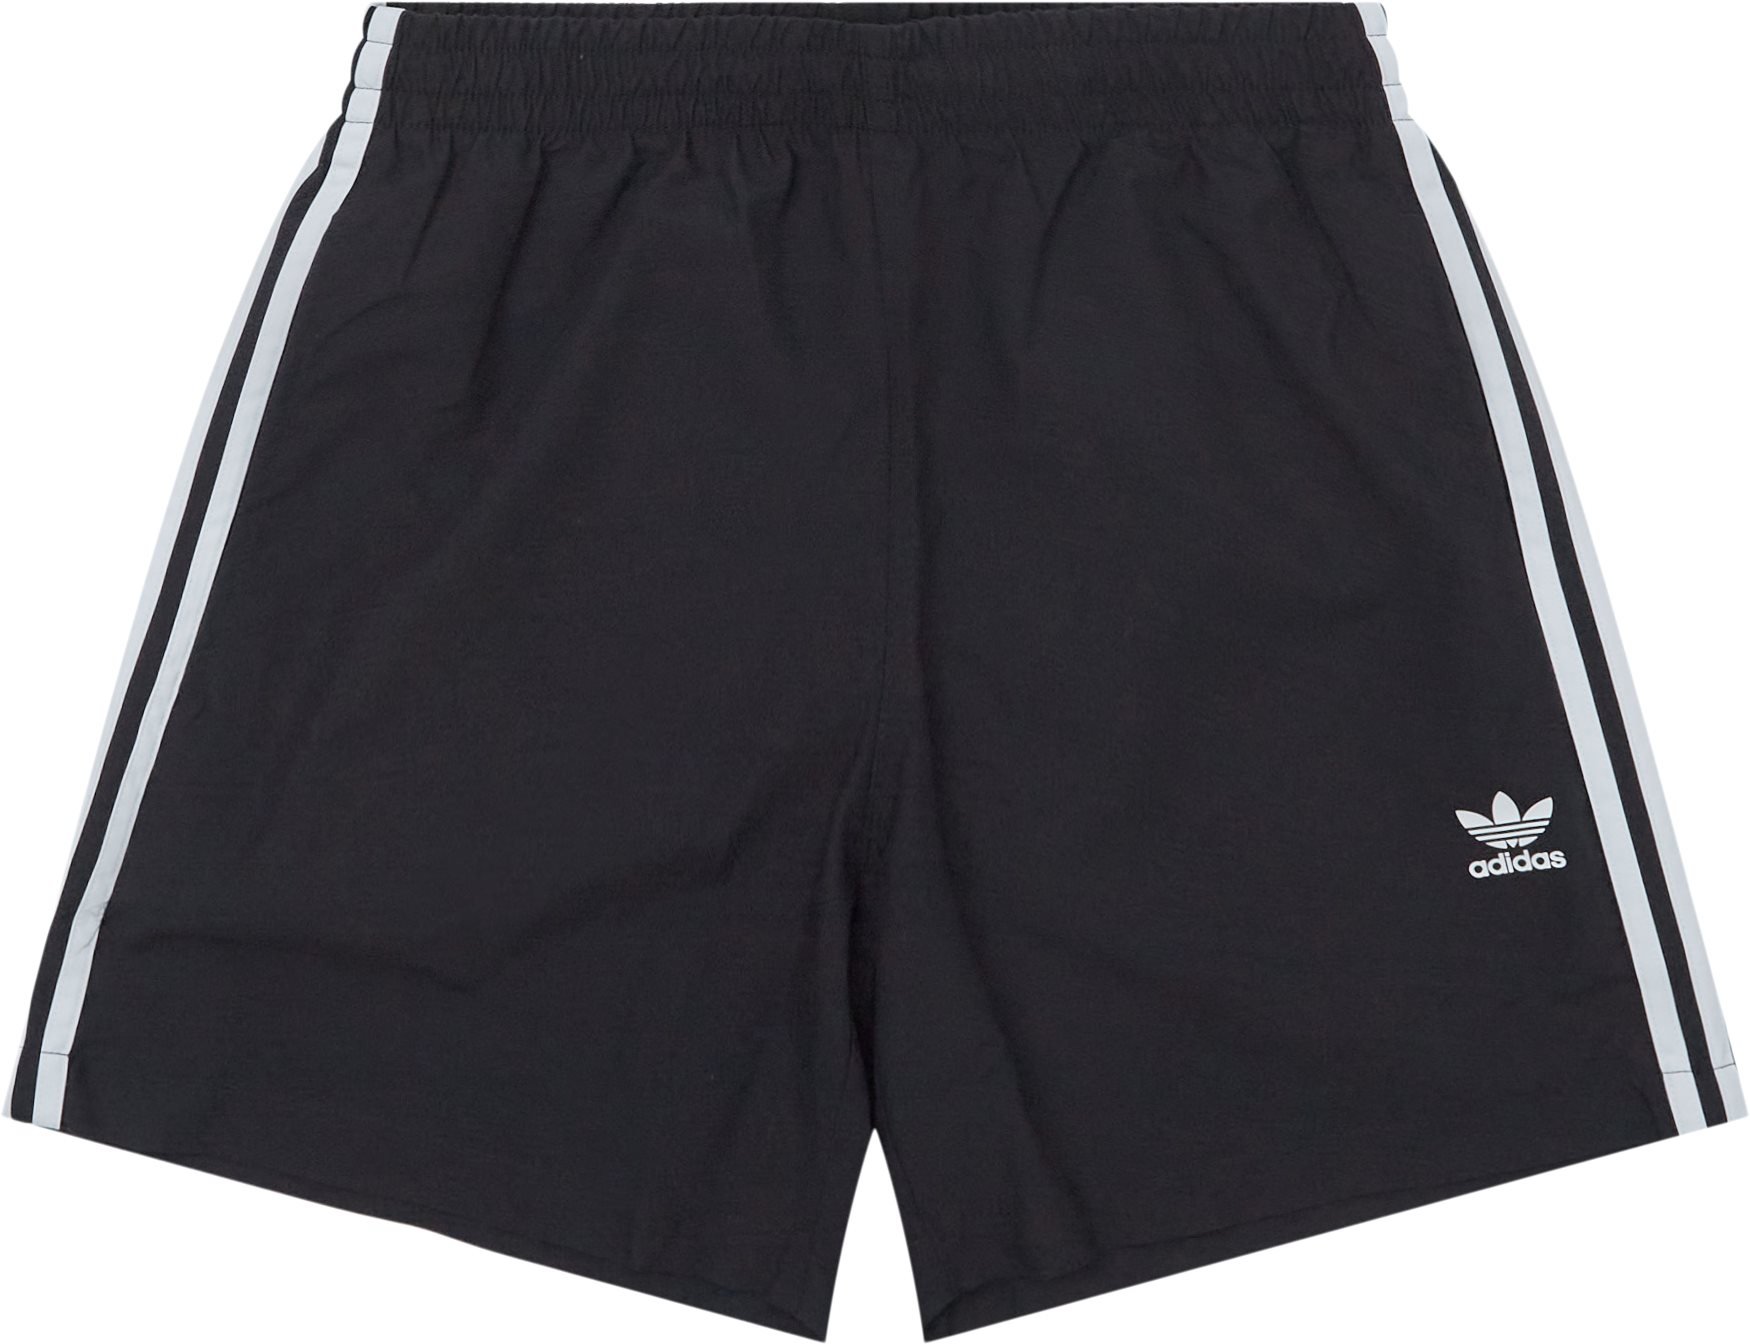 Adidas Originals Shorts 3-STRIPES SWIM SS22 Sort